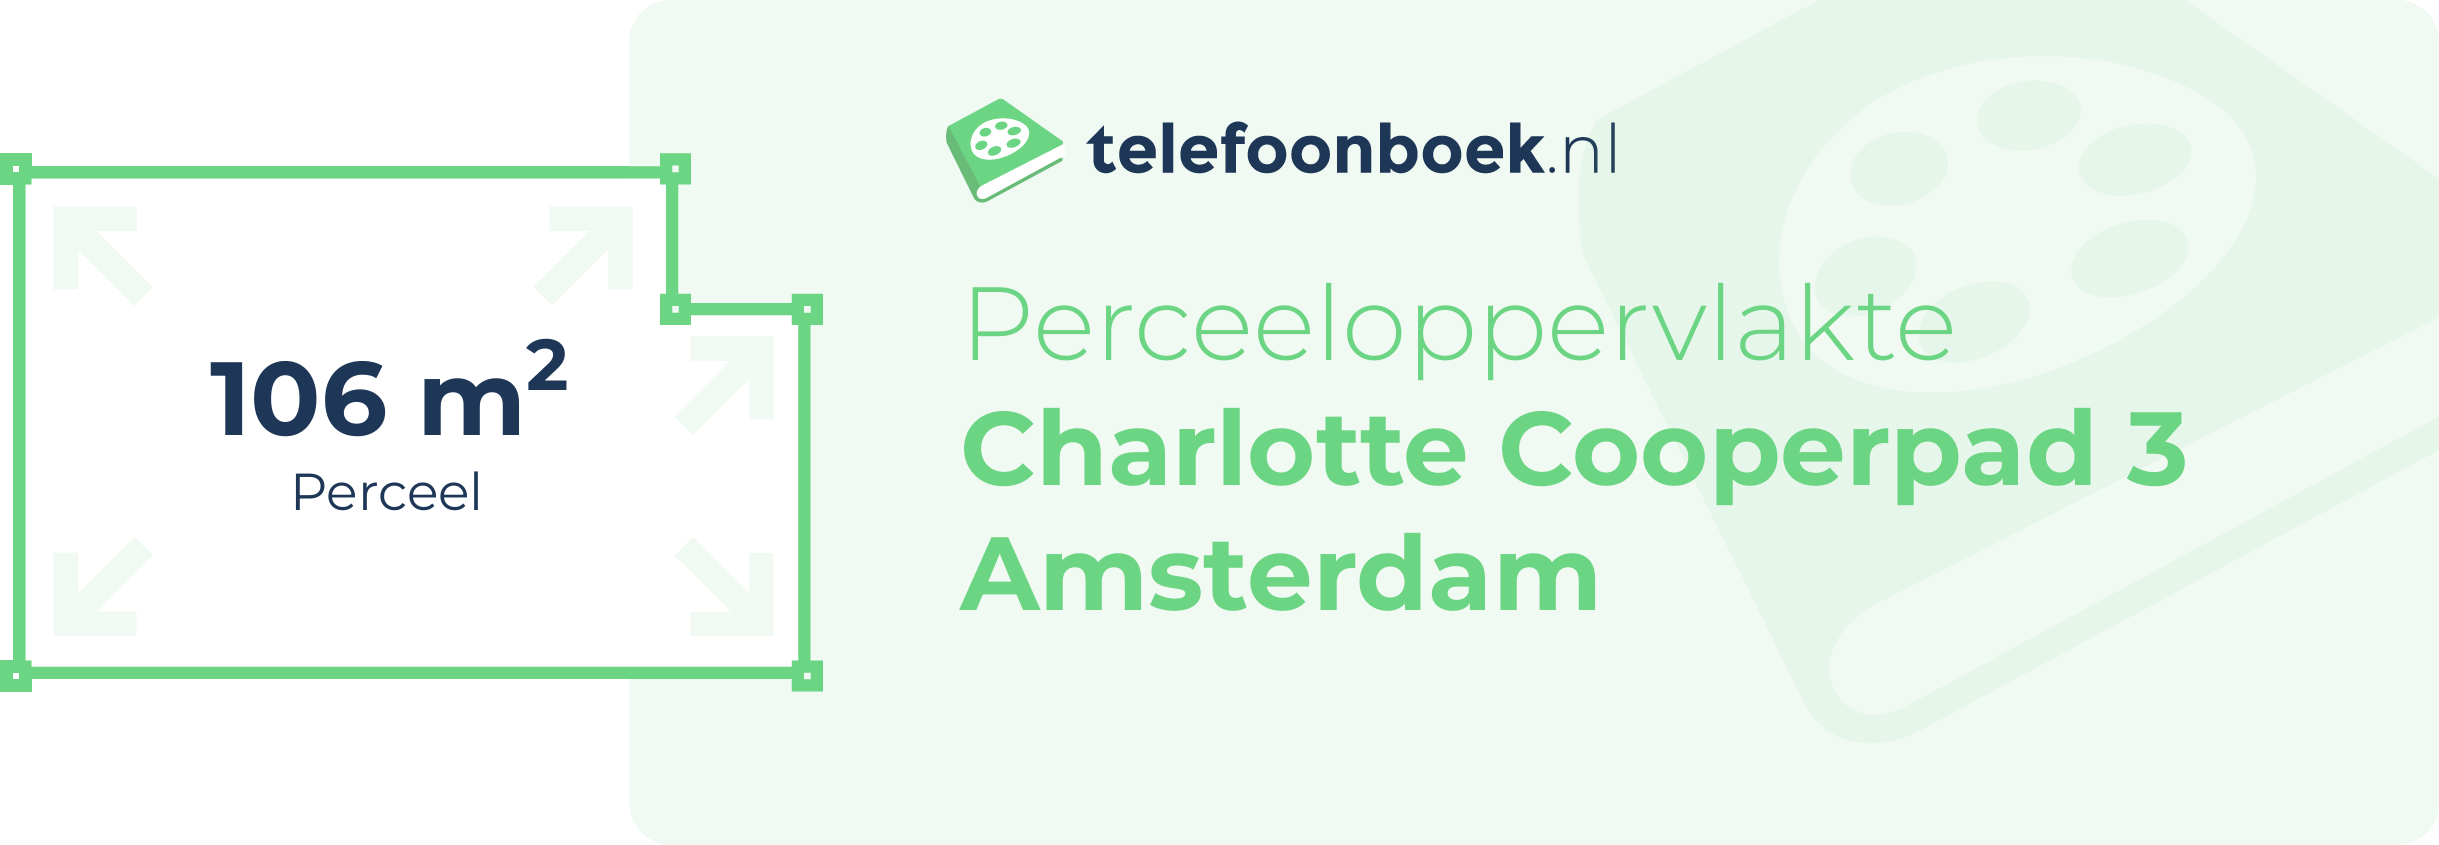 Perceeloppervlakte Charlotte Cooperpad 3 Amsterdam